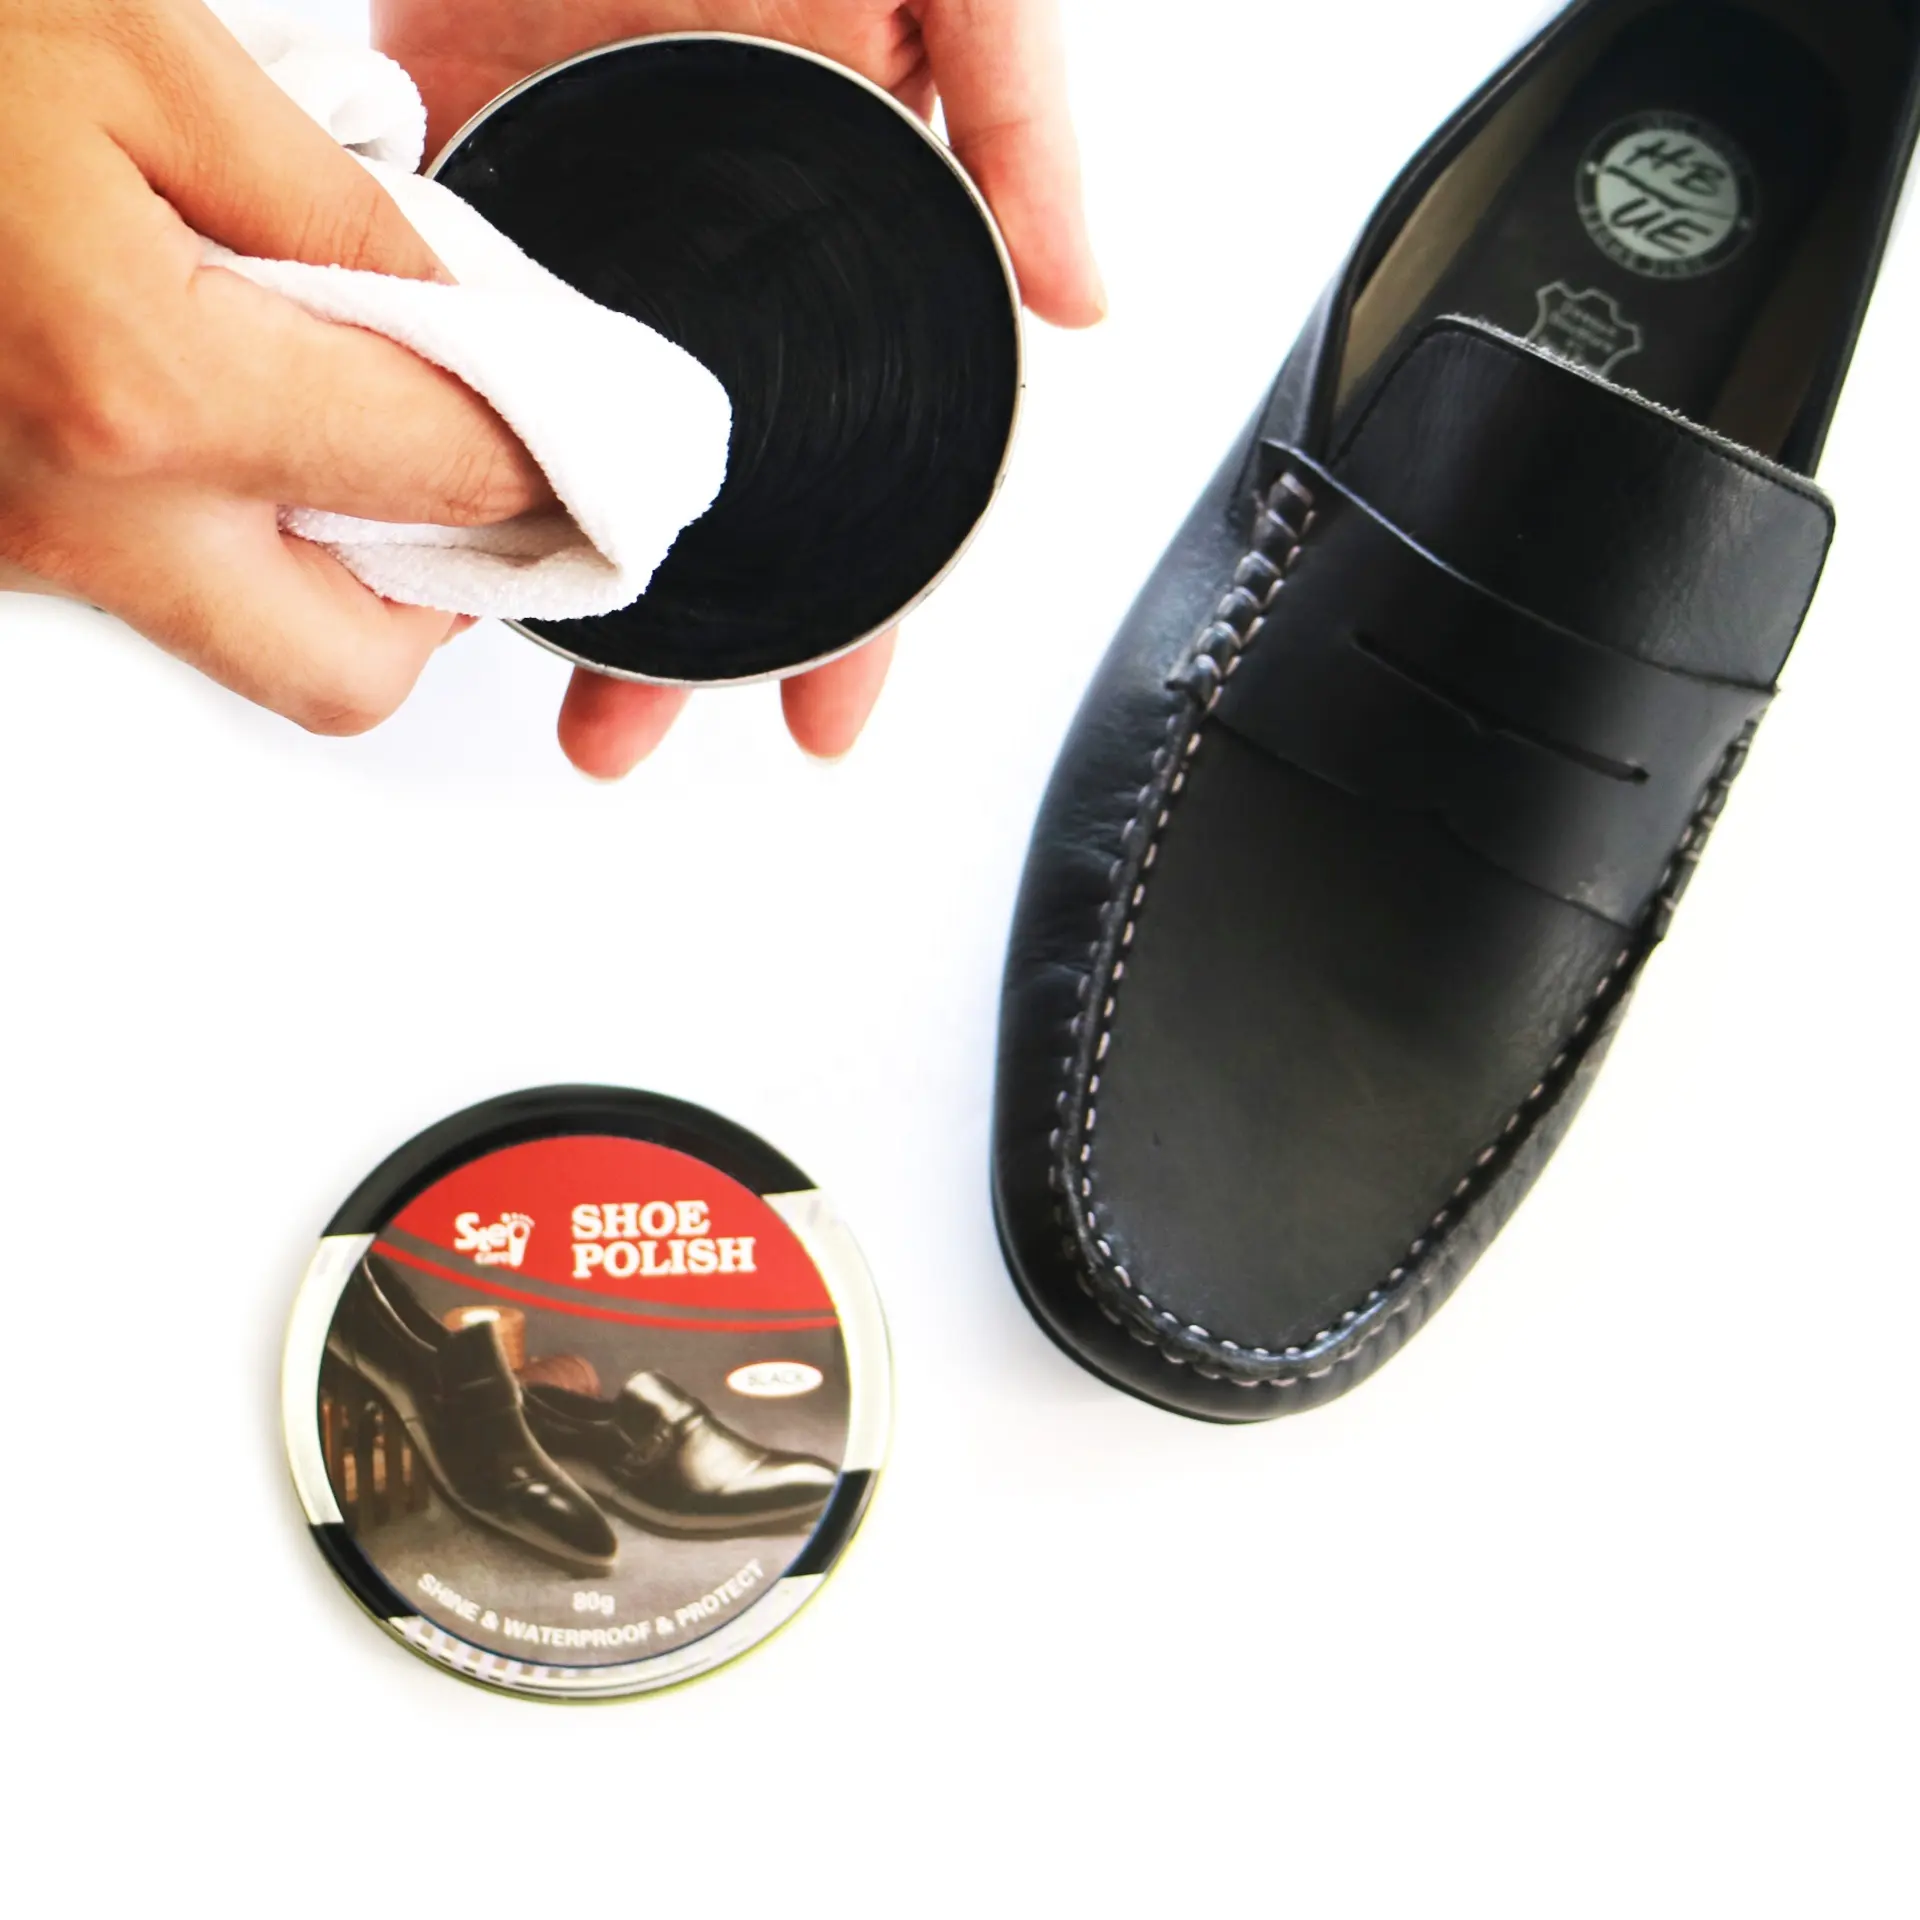 40g metal tin Black or brown solid shoe polish